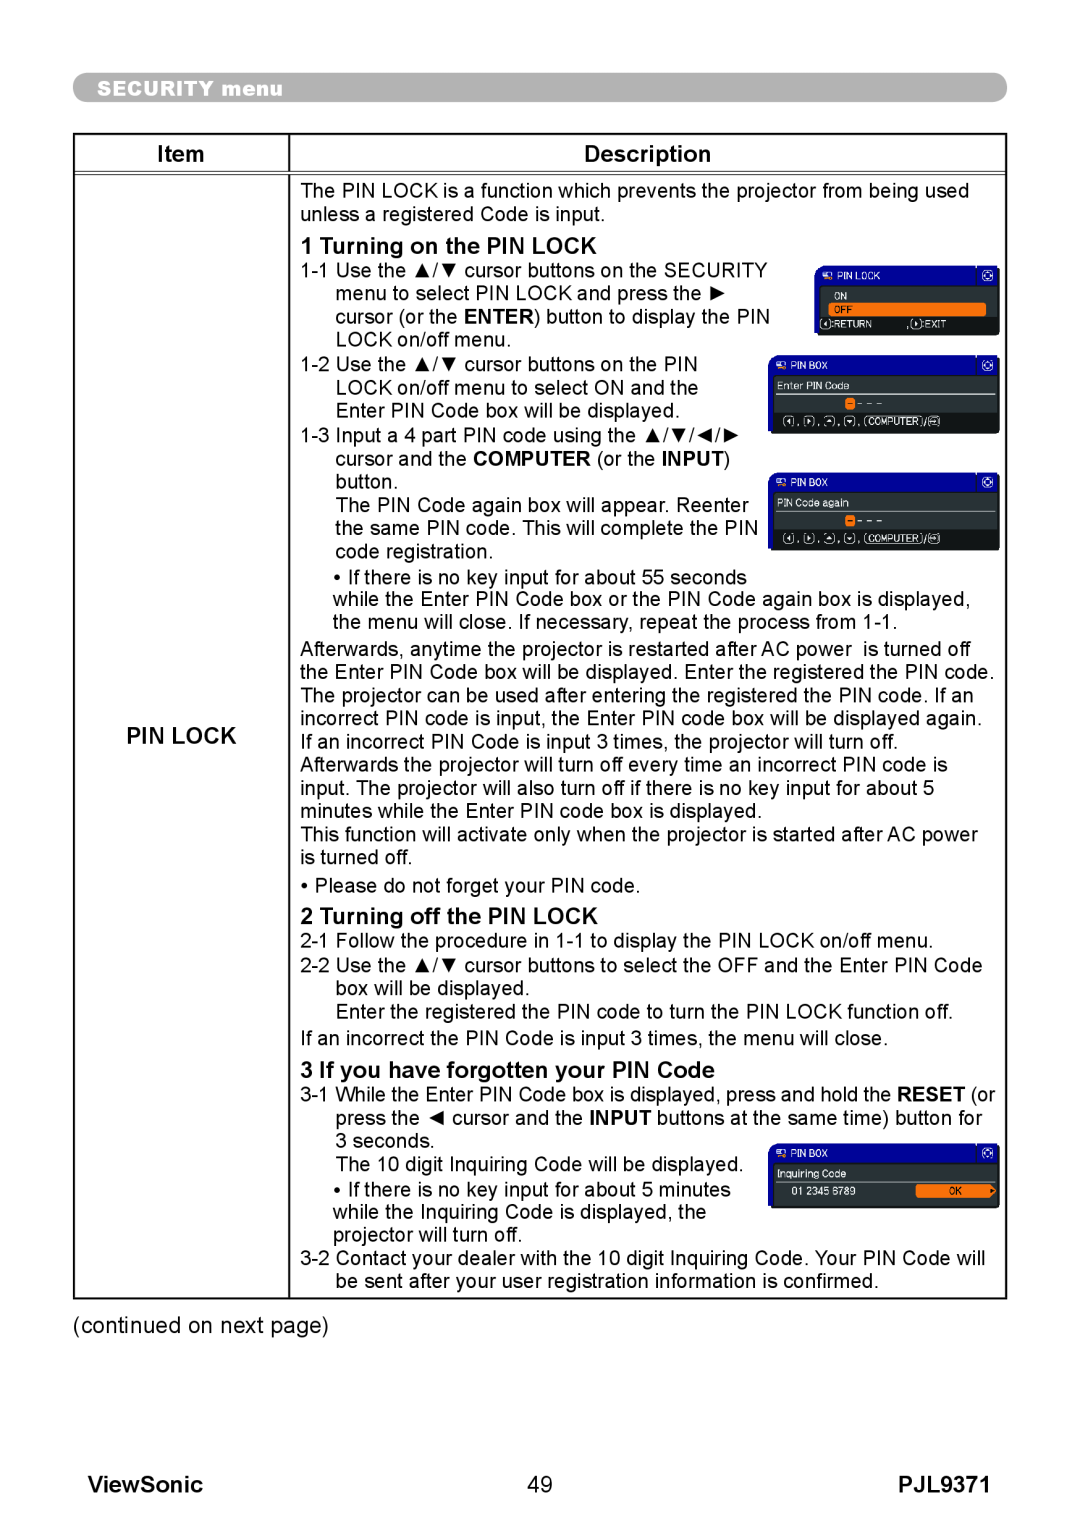 ViewSonic pjl9371 Item, Description, Pin Lock, Turning on the PIN LOCK, Turning off the PIN LOCK, ViewSonic, SECURITY menu 